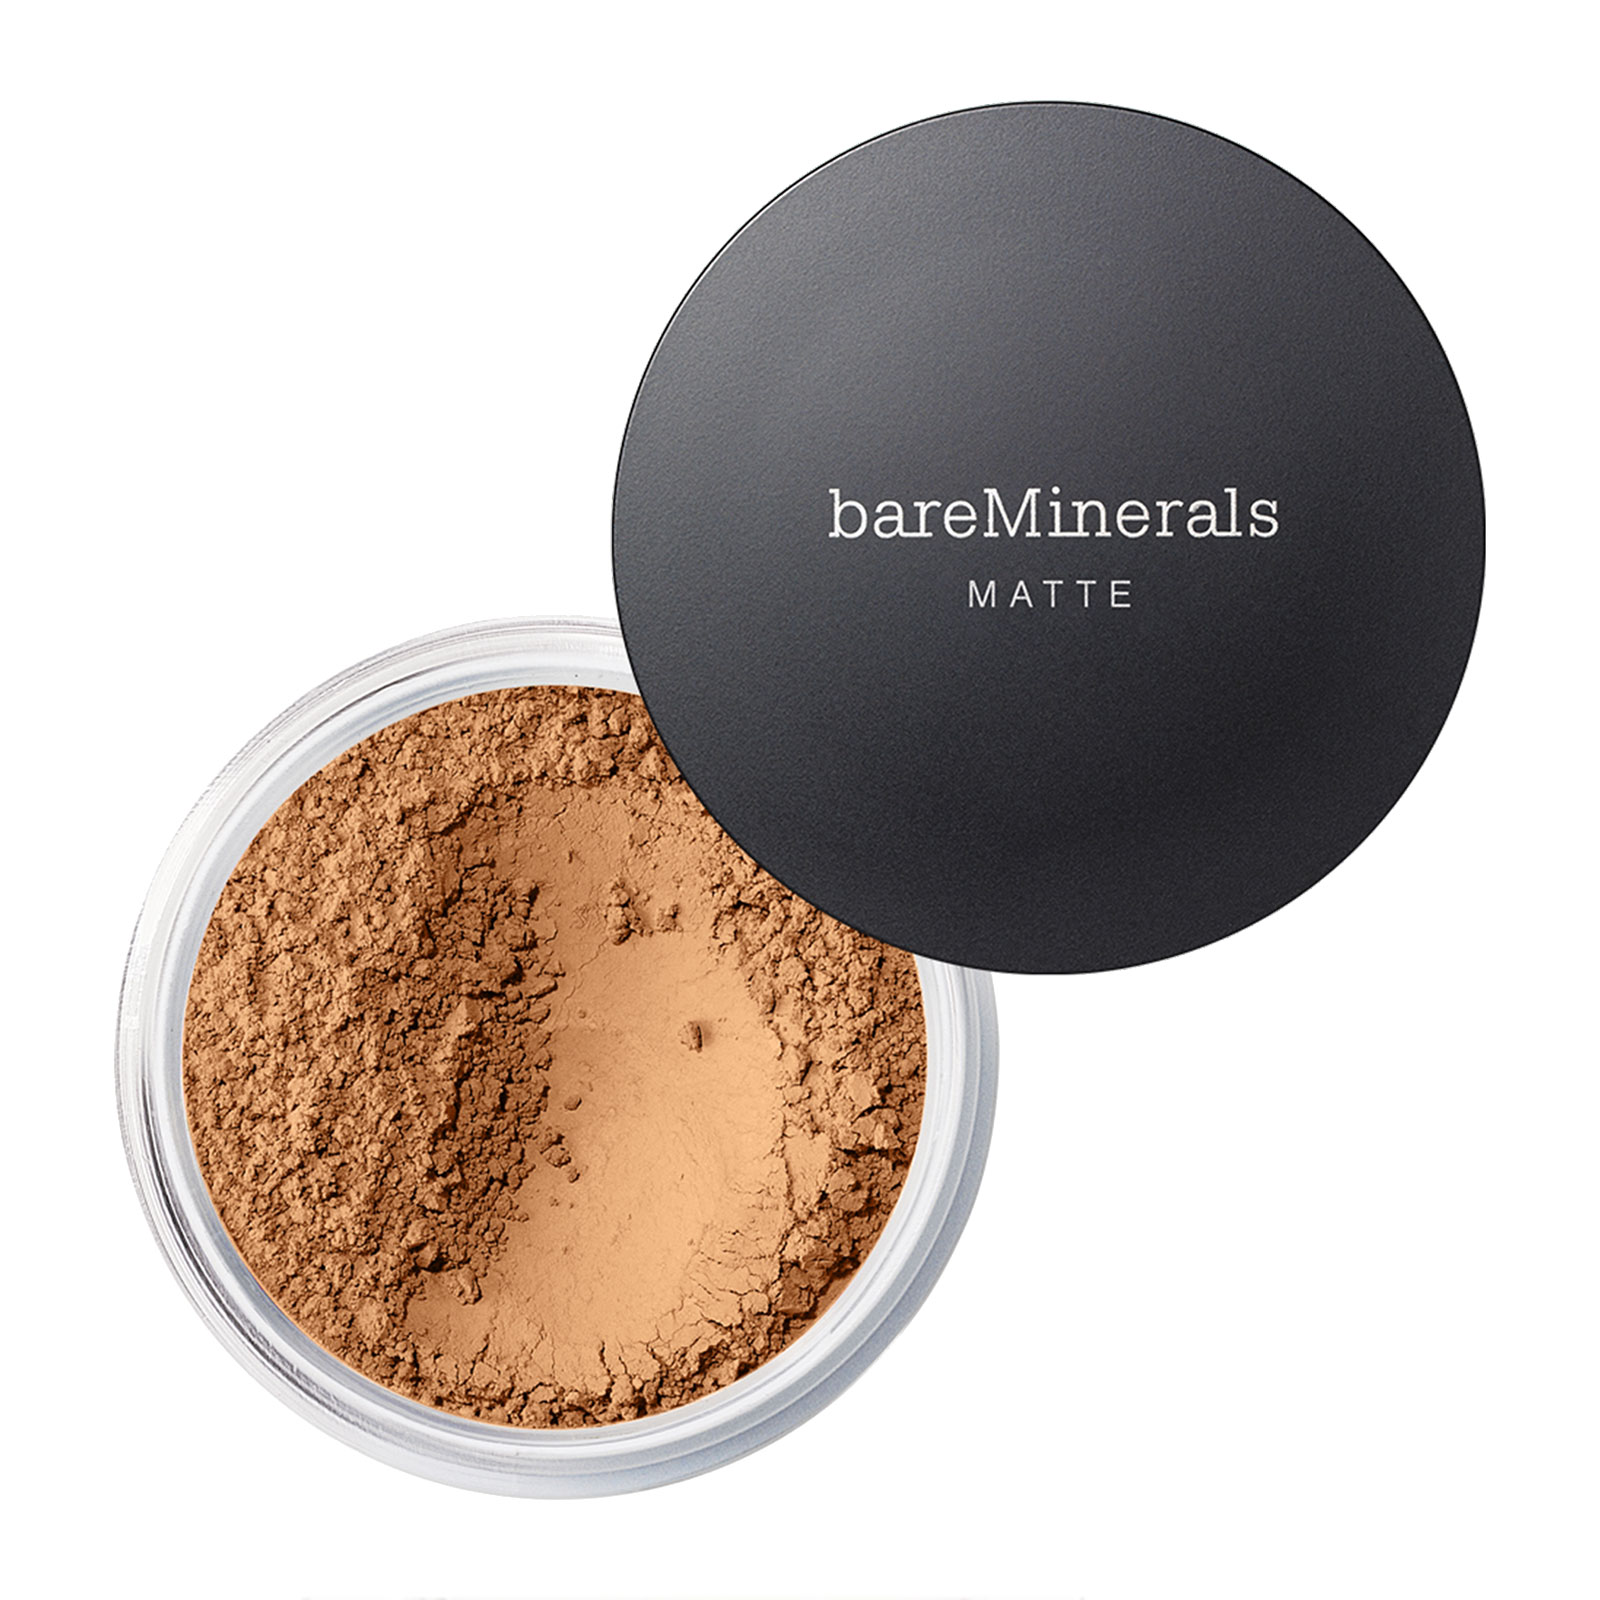 Bareminerals Matte Mineral Loose Powder Foundation Spf15 6G 21 Neutral Tan (Tan/Dark, Warm)